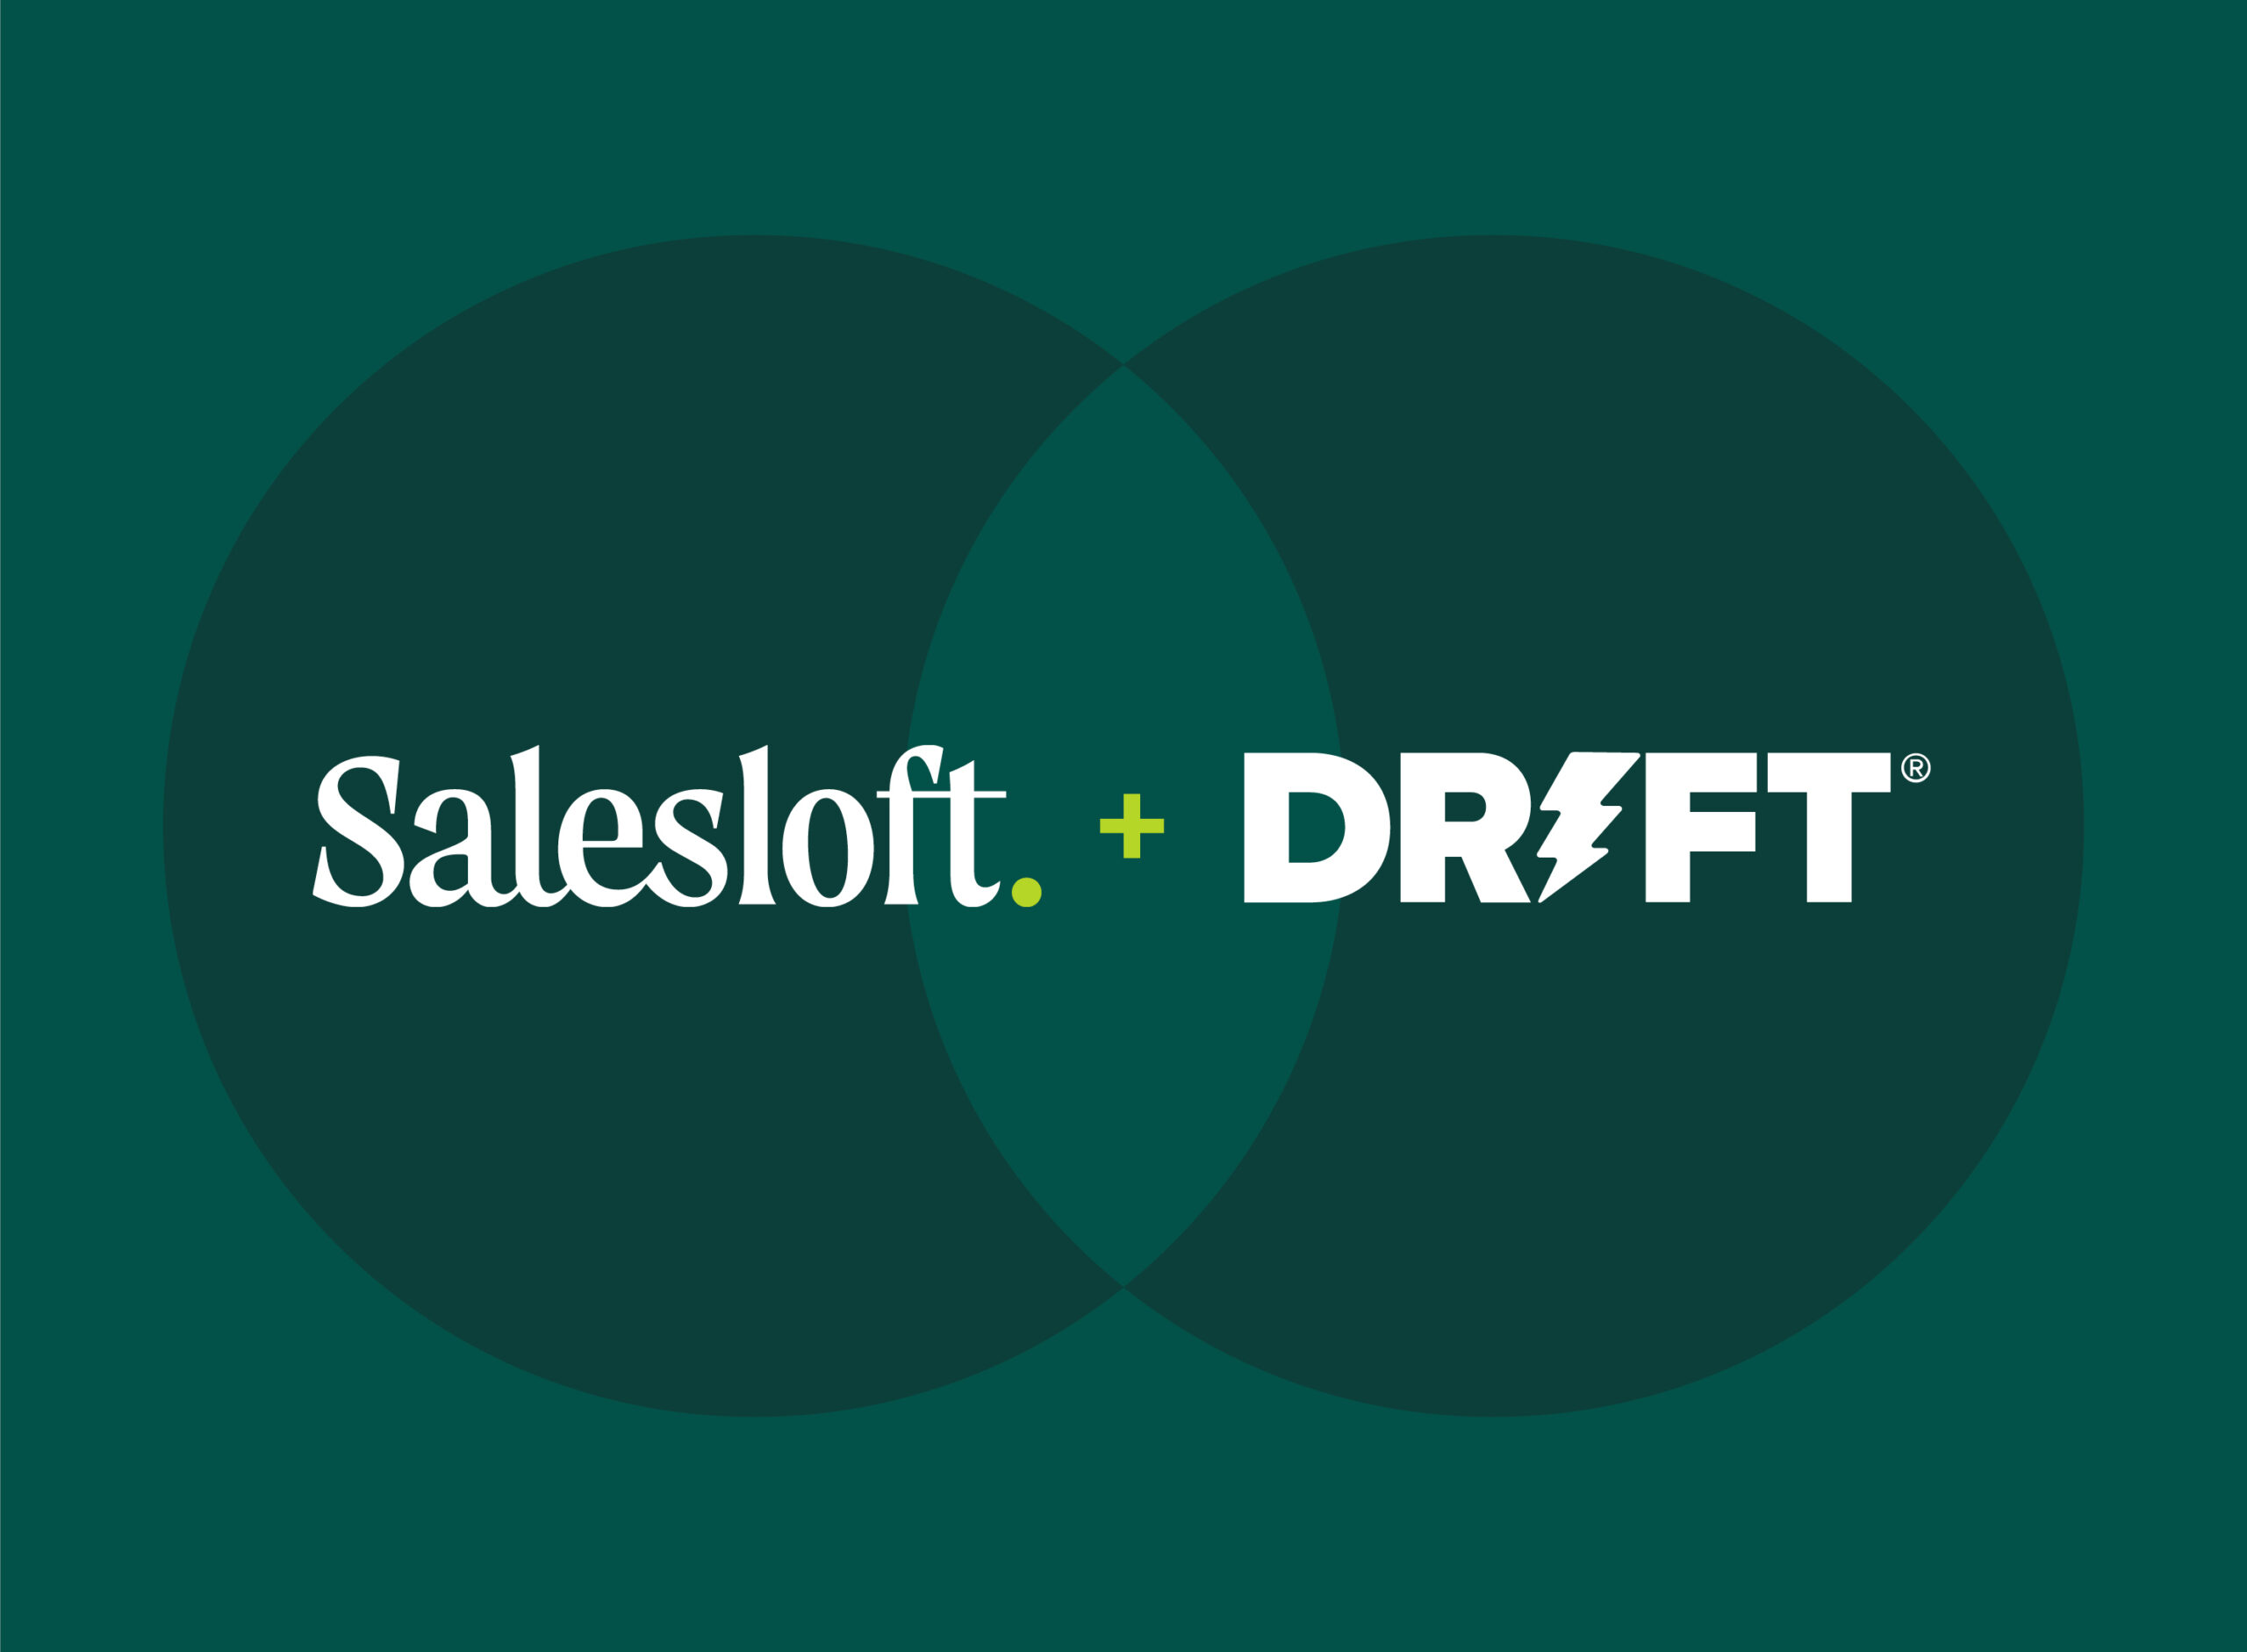 Salesloft + Drift: What's Next